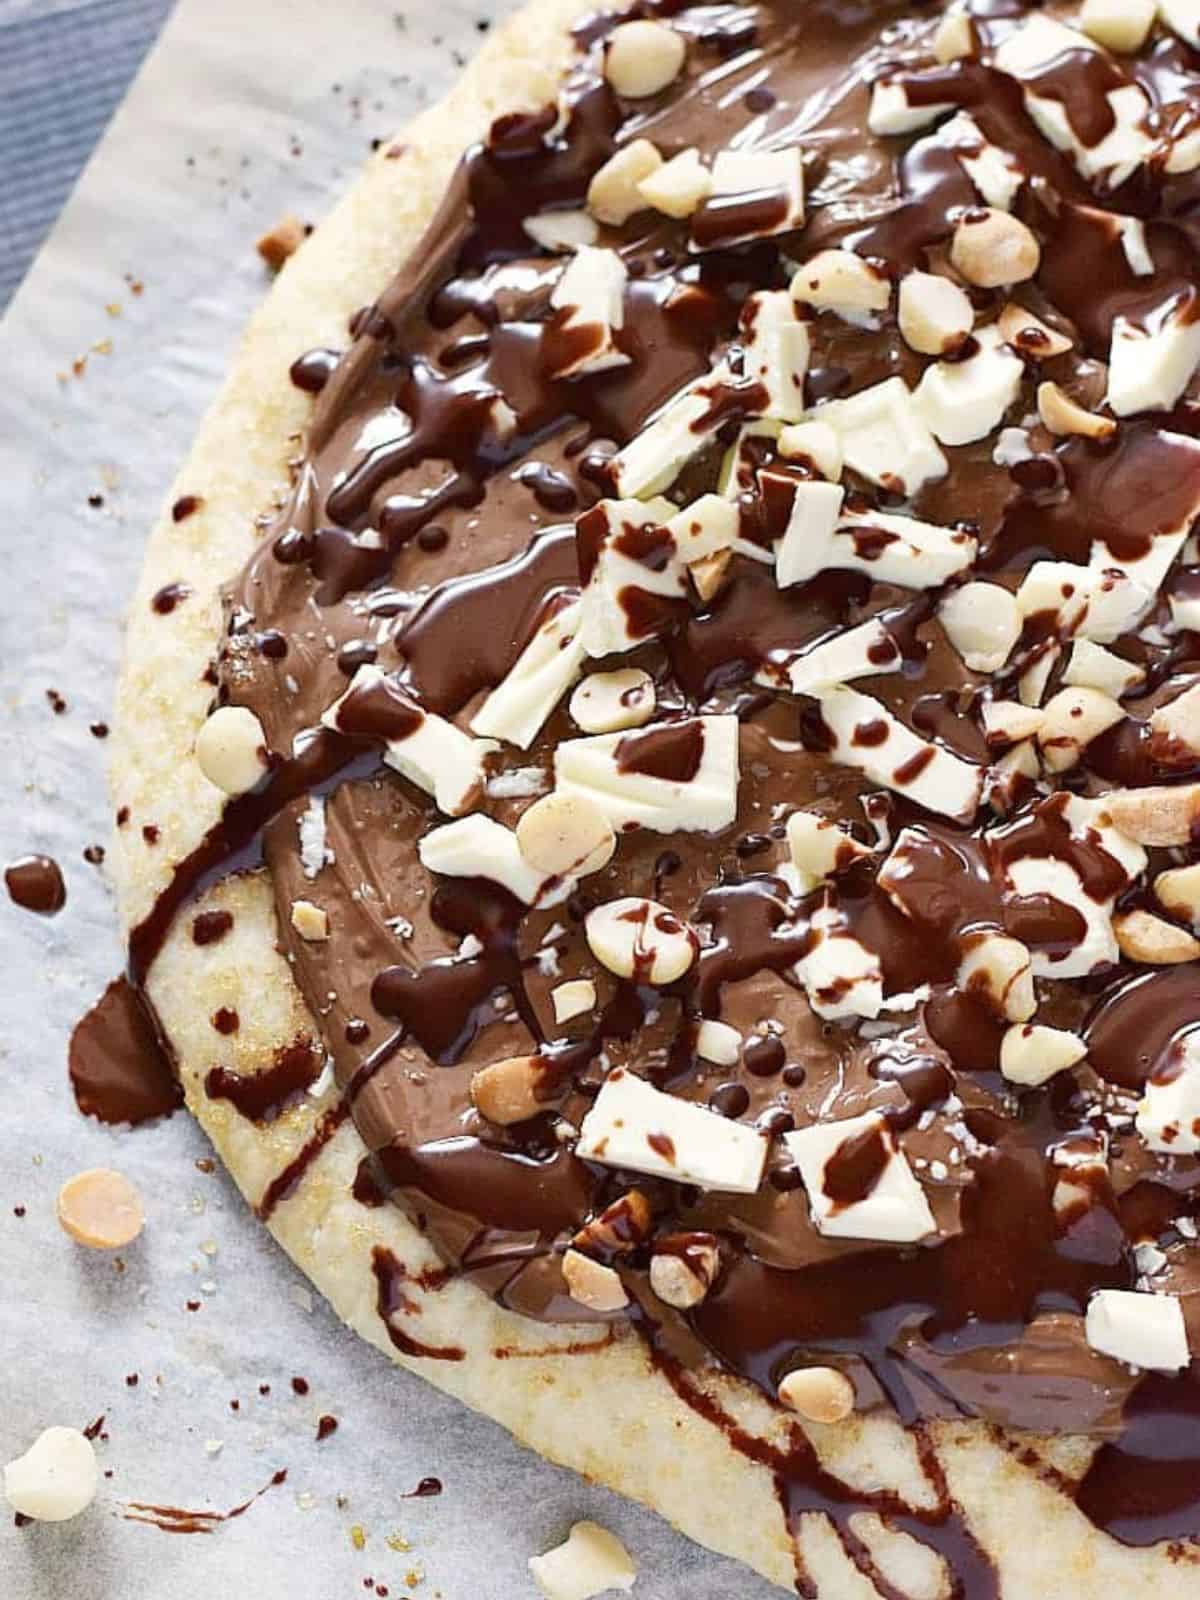 chocolate hazelnut pizza topped with white chocolate chunks, chopped hazelnuts, and a drizzle of chocolate sauce.